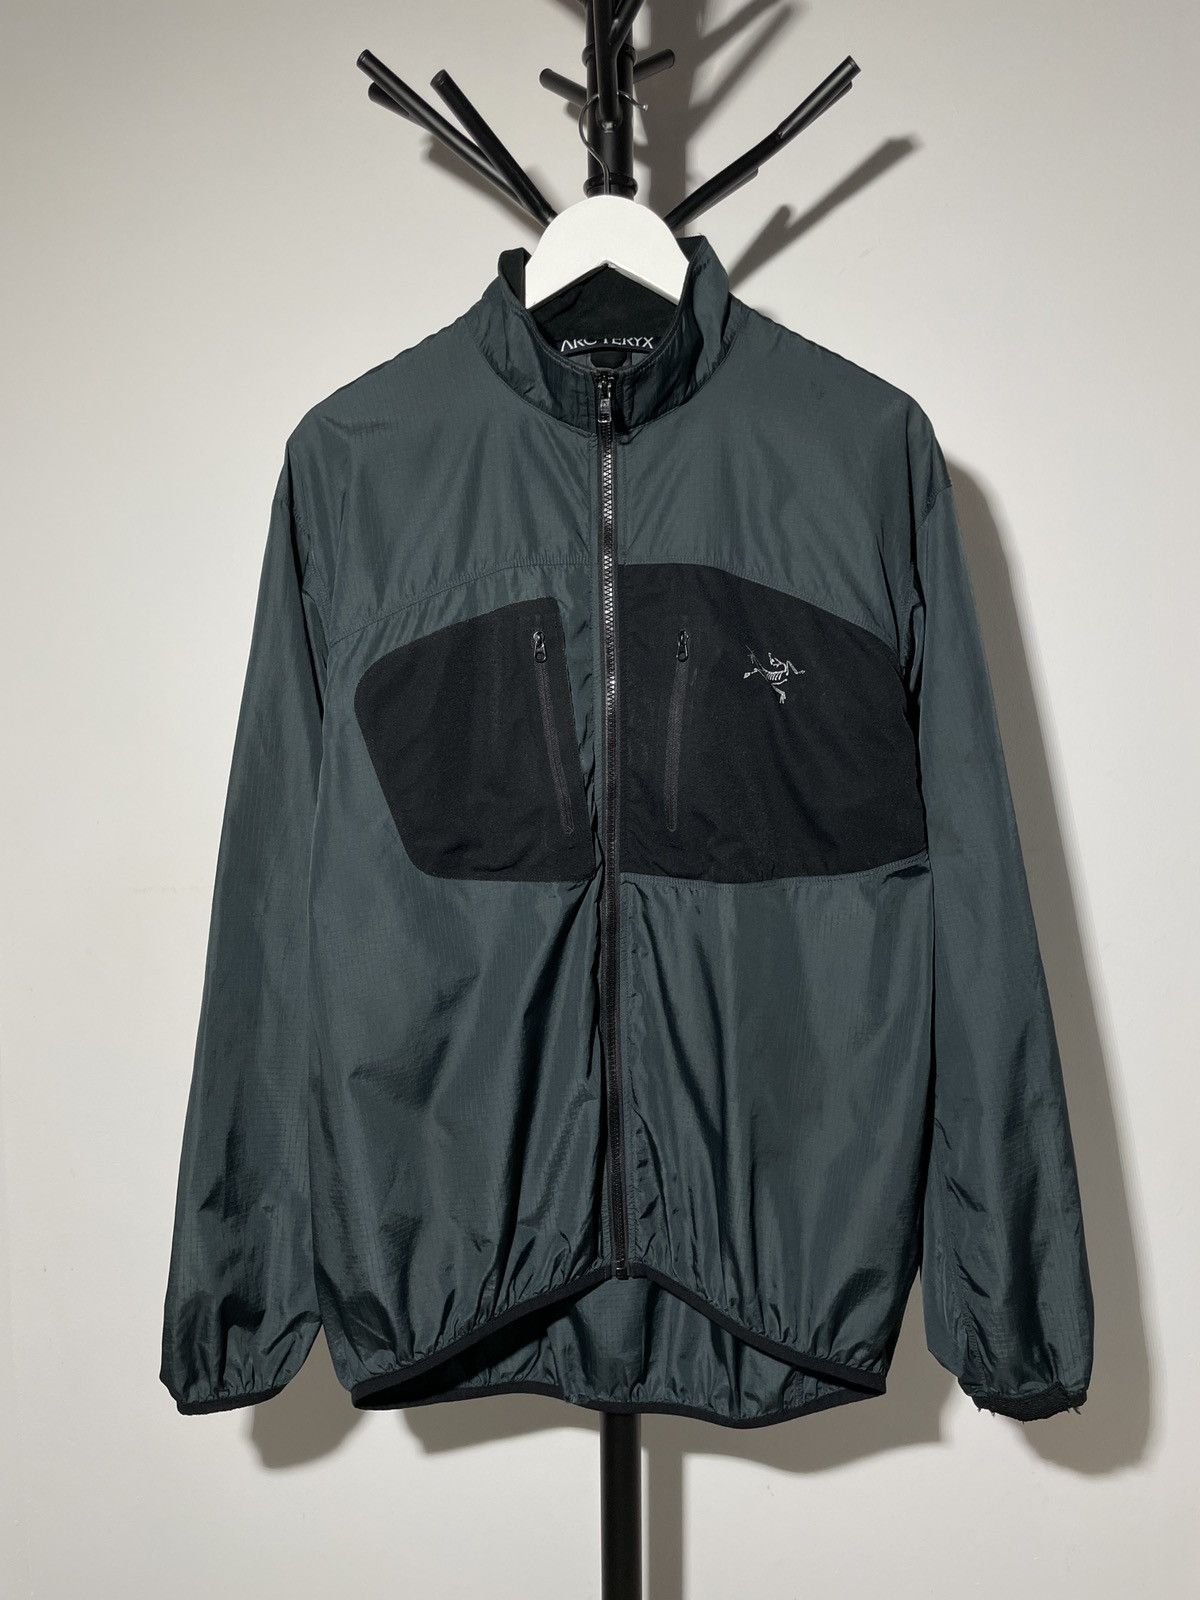 Arc'Teryx Ar’cteryx Vintage 90’s Running RARE Jacket | Grailed